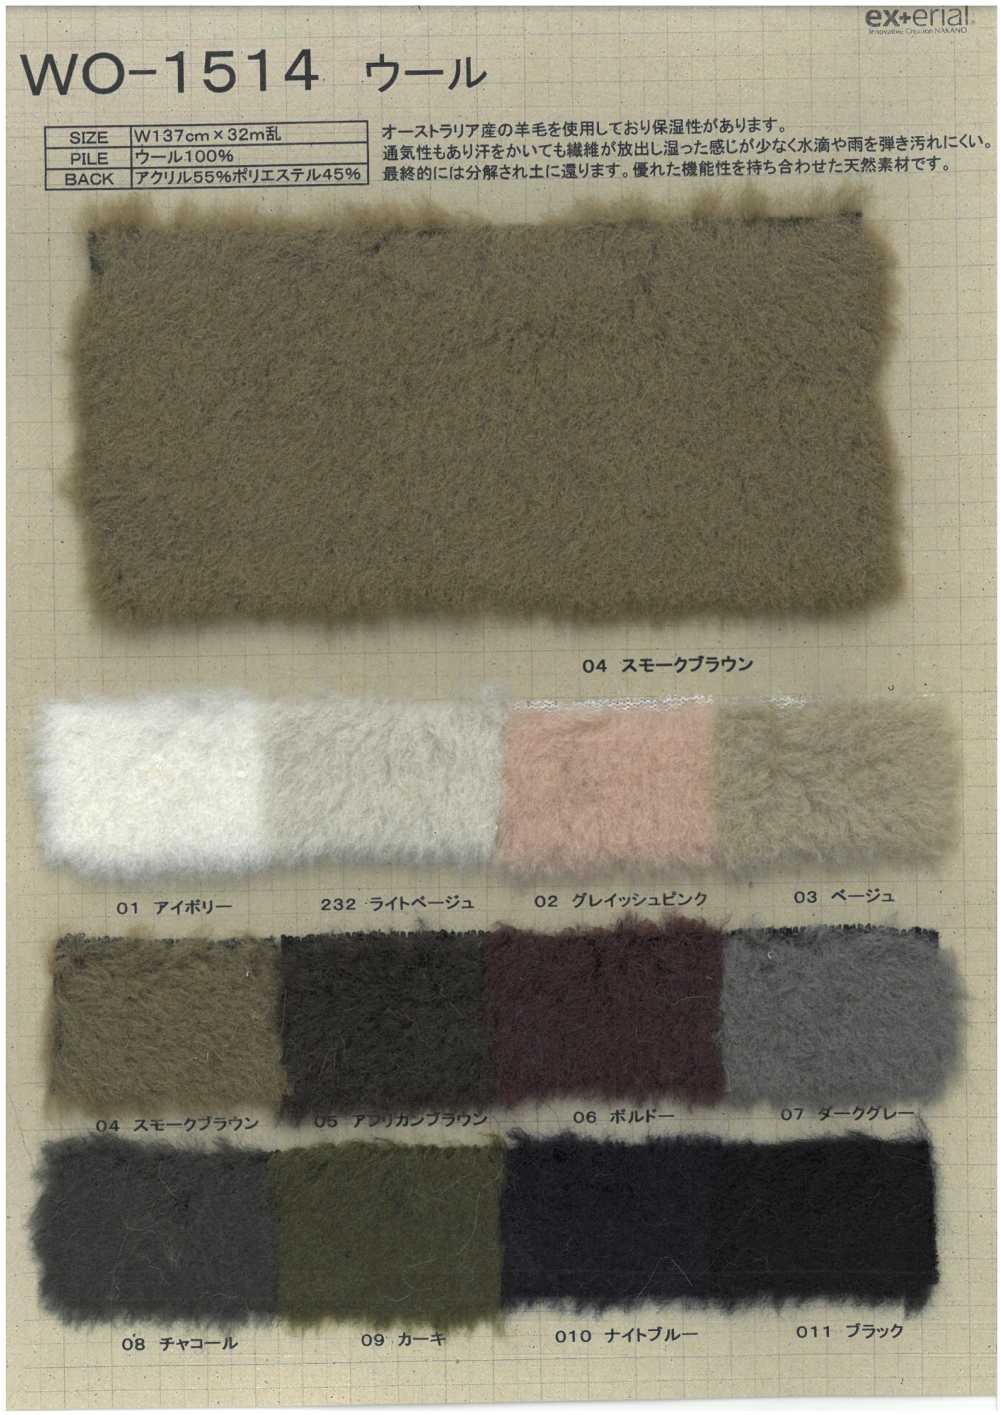 WO-1514 Bastelfell [Wollschaf][Textilgewebe] Nakano-Strümpfe-Industrie